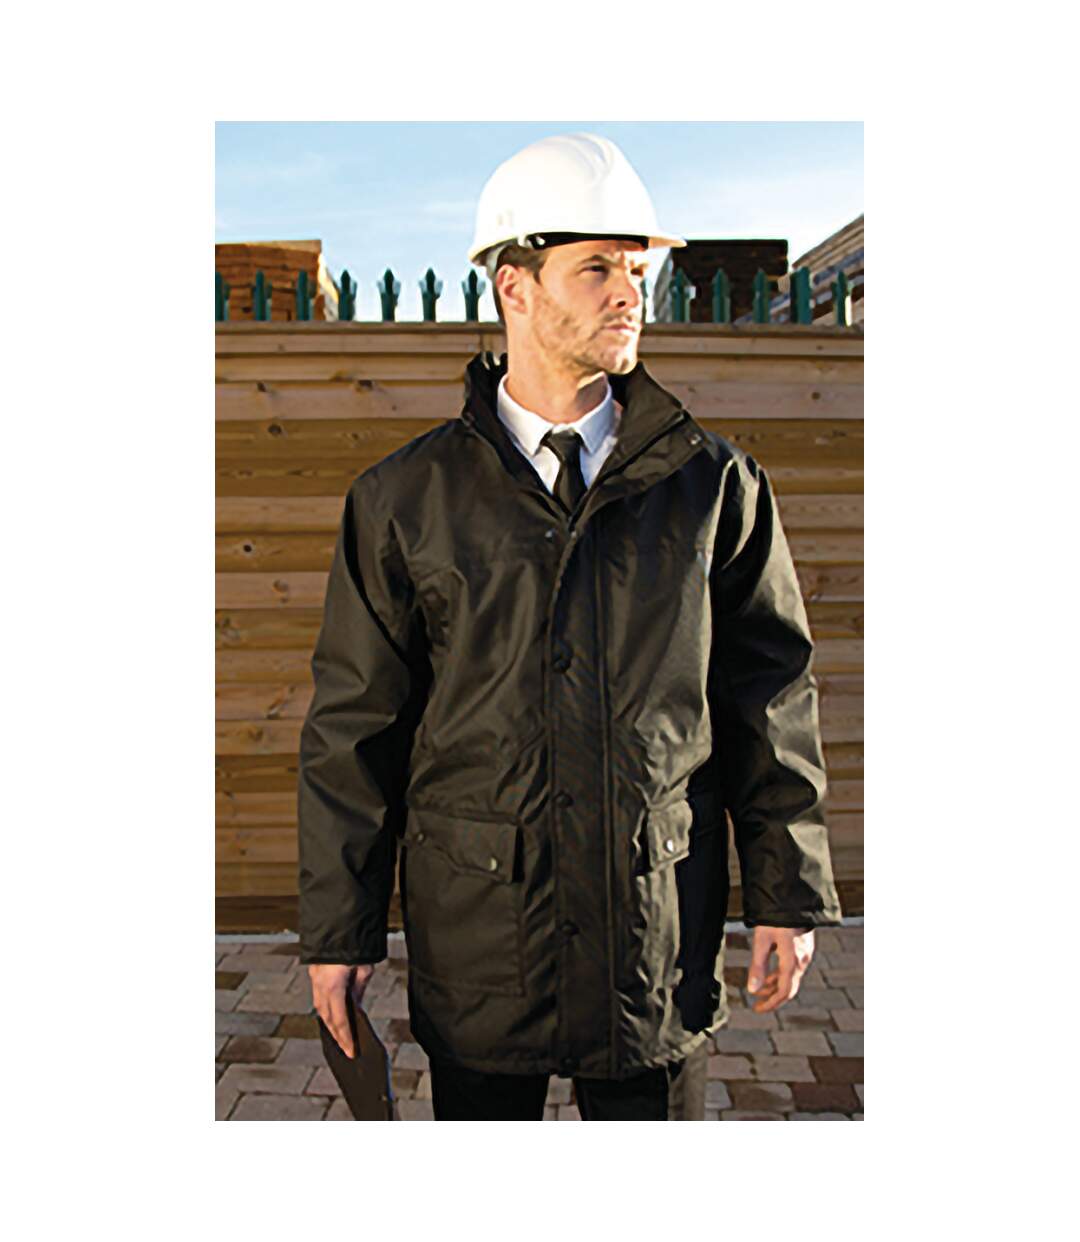 Result Mens Platinum Work Jacket / Coat (Black) - UTBC2800